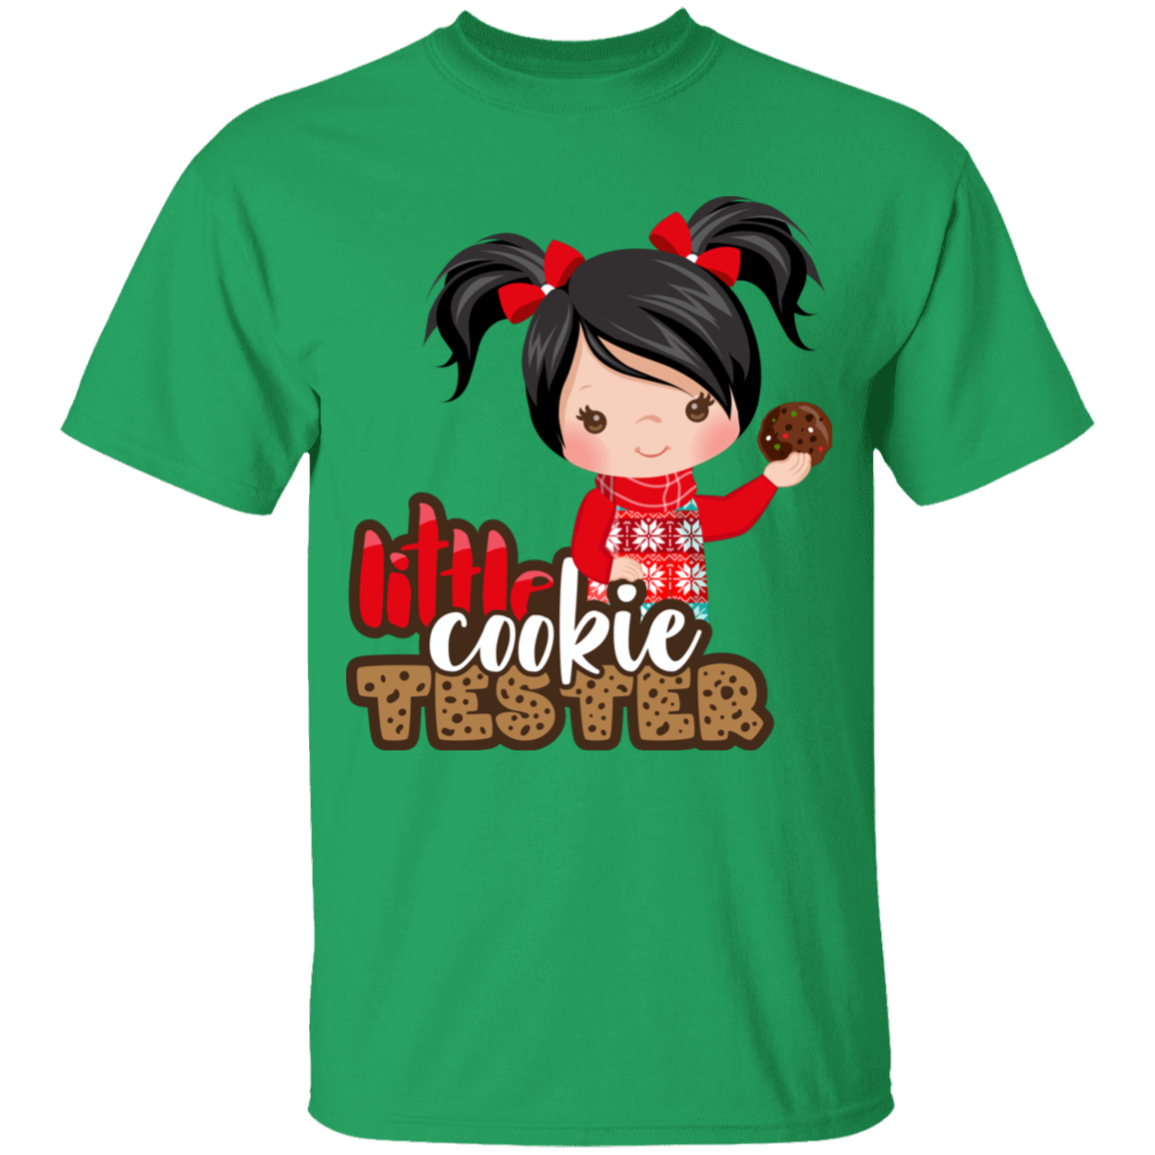 Little Cookie Tester Black Hair Girl 100% Cotton T-Shirt